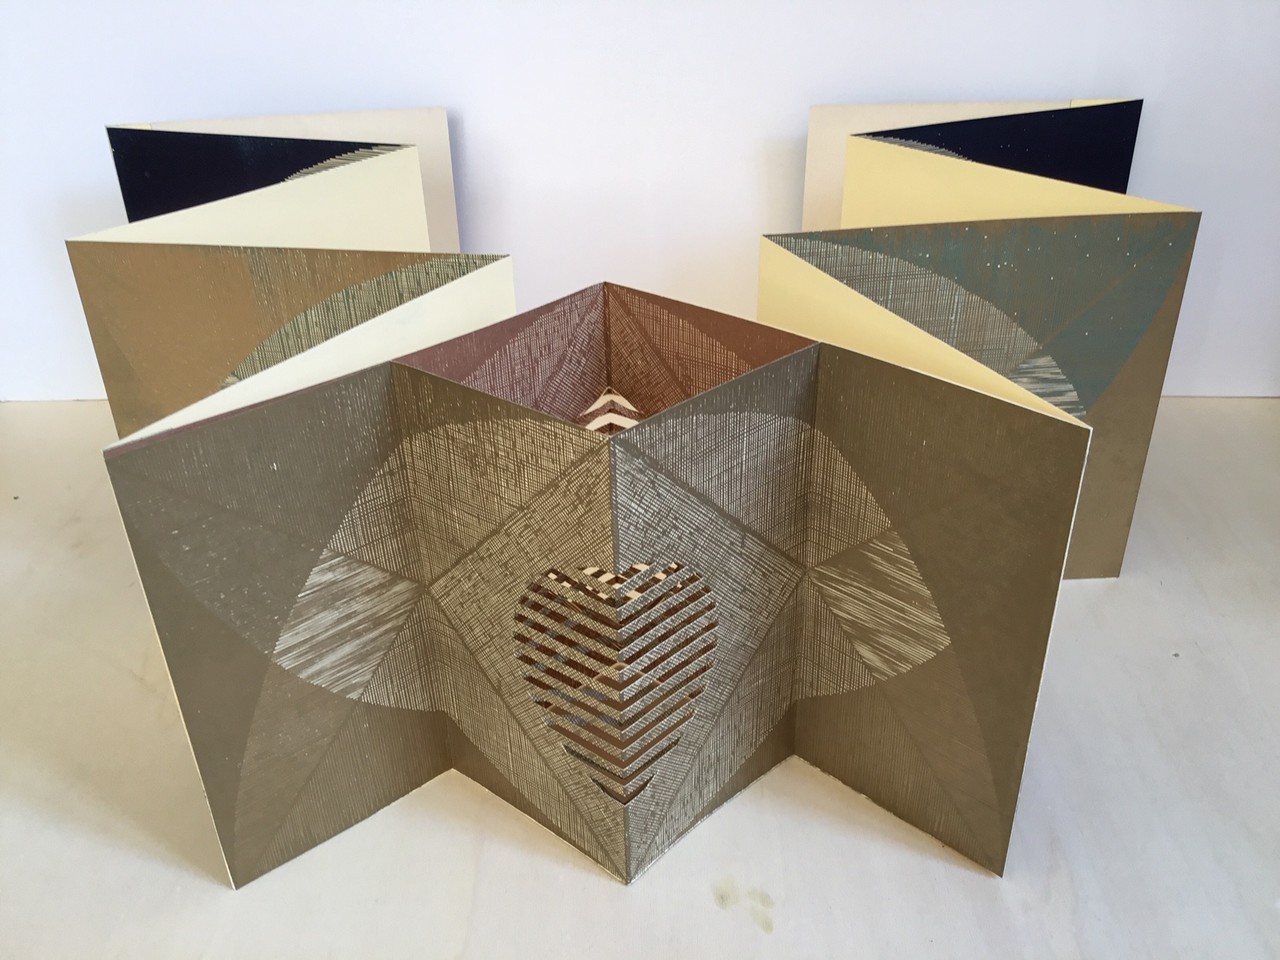 Susanna Doccioli  “BLUAUREO (The guide)” Artis’s  book Linocut print on paper and paperboard   22x22cm    2021